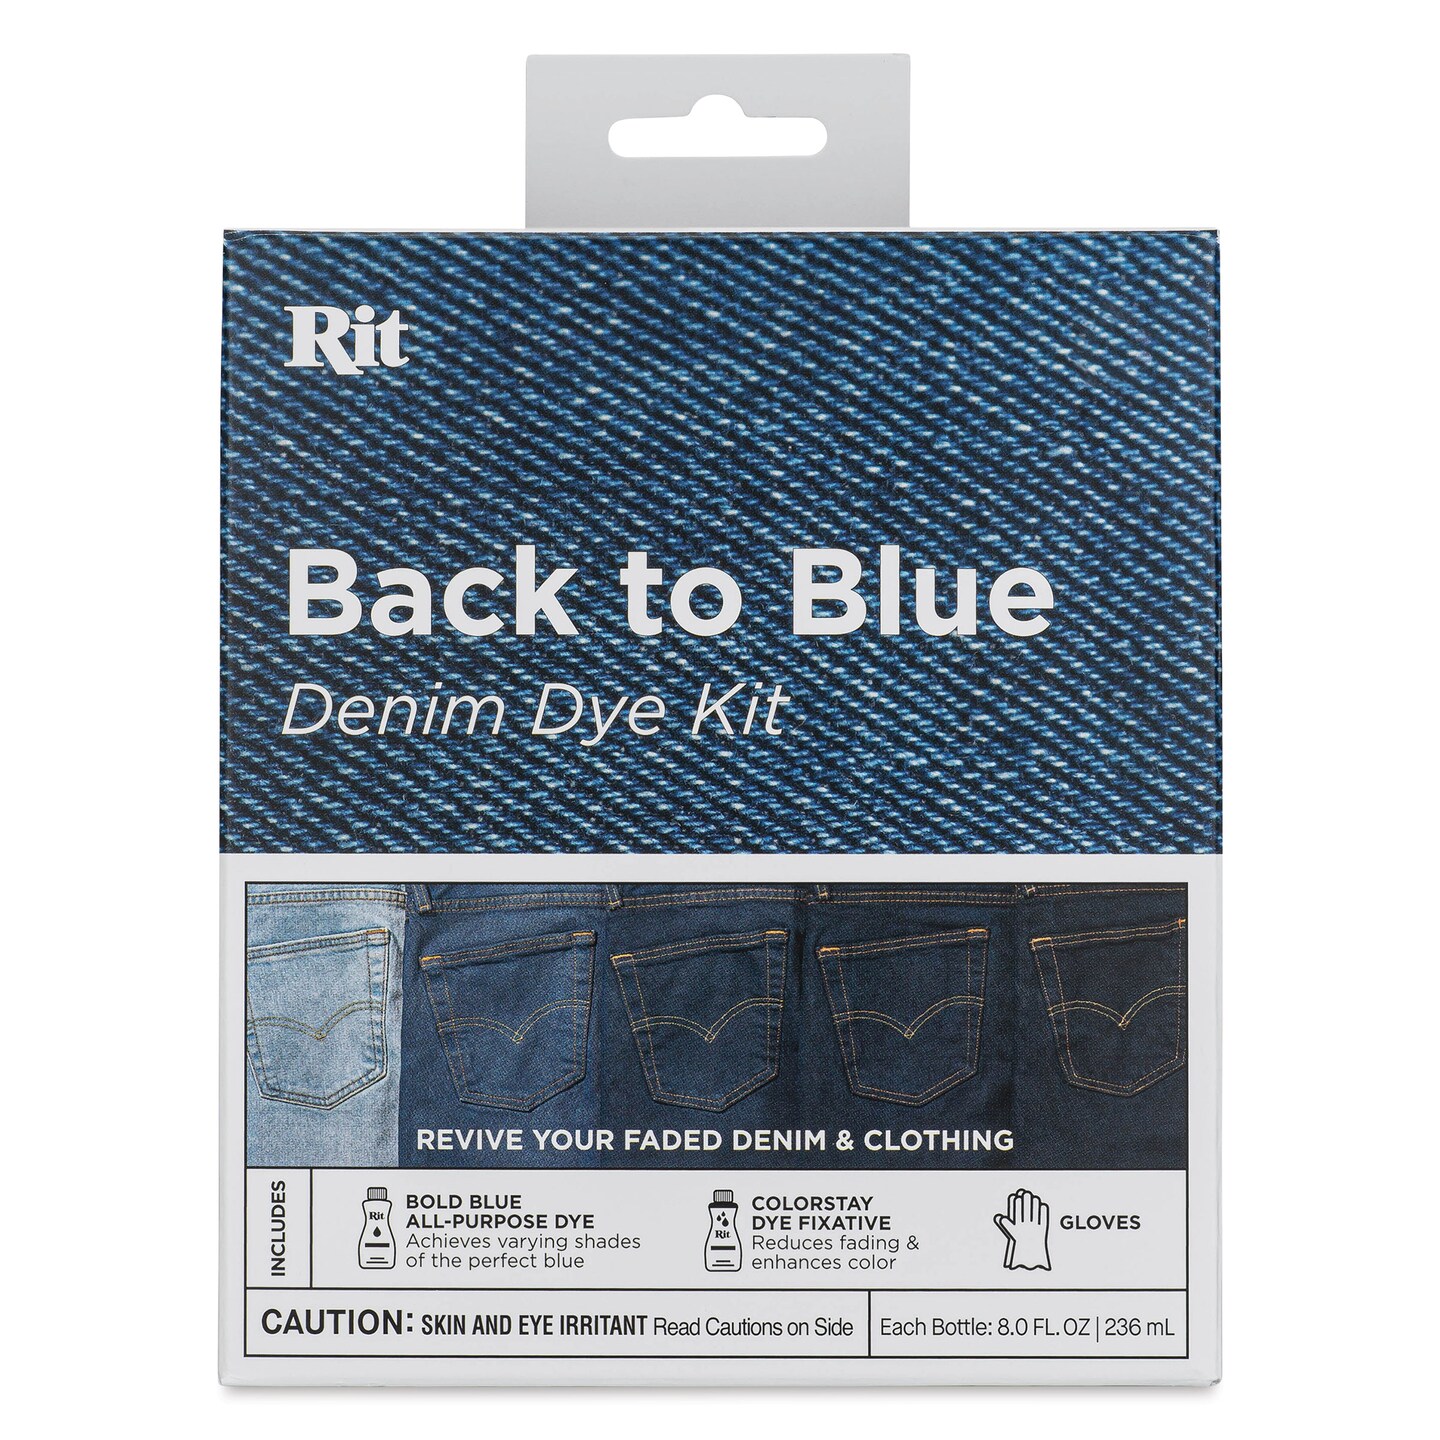 Rit Back to Blue Denim Dye Kit